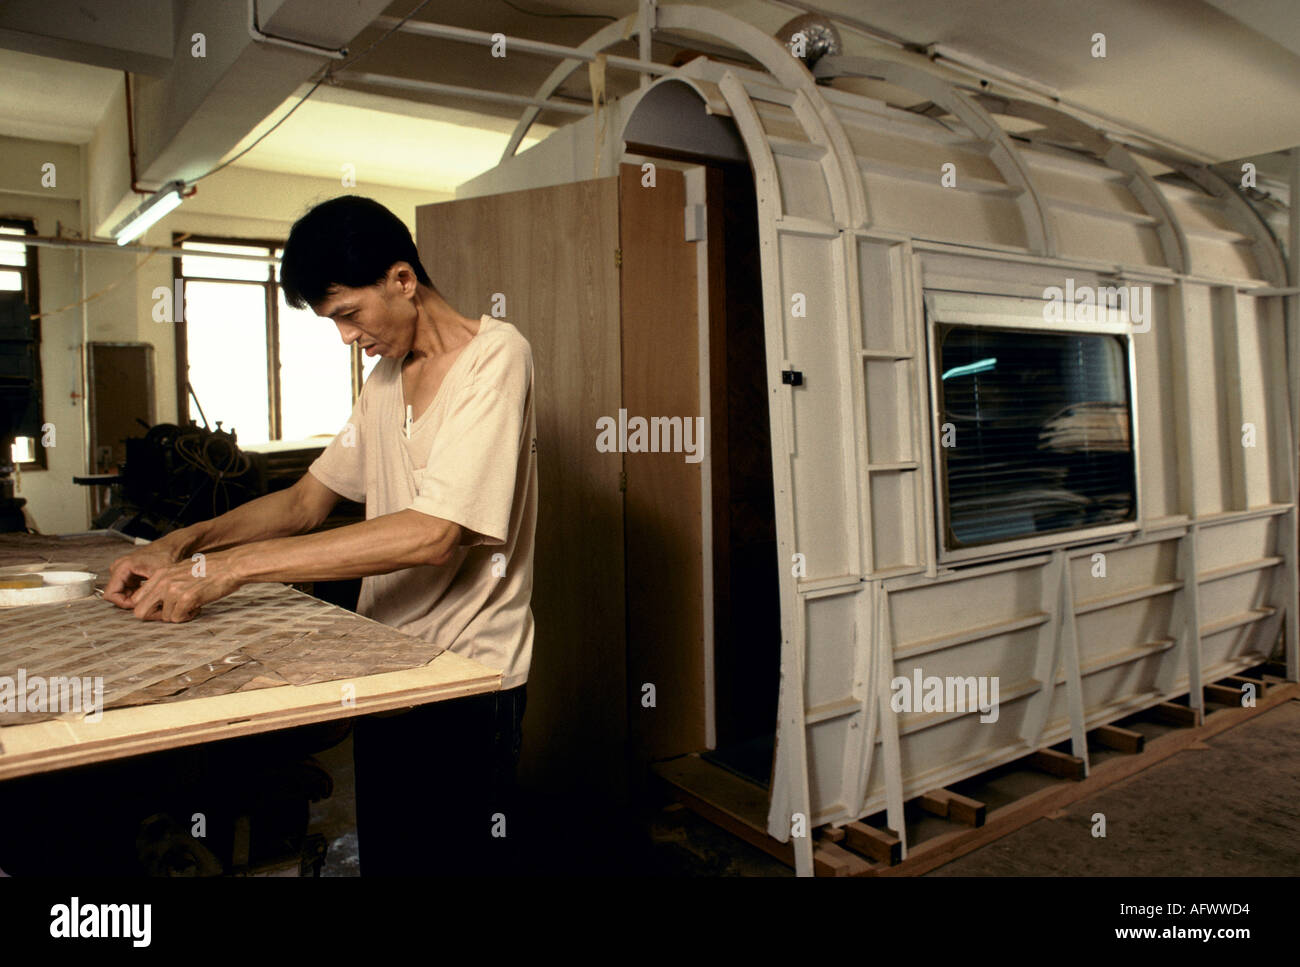 Eastern Orient Express Zug Handwerker Meng Cheng Fabrik schaffen das Innere eines Luxus-Zug Wagen. Singapur SE Asien. 1990er Jahre 1991 HOMER SYKES Stockfoto